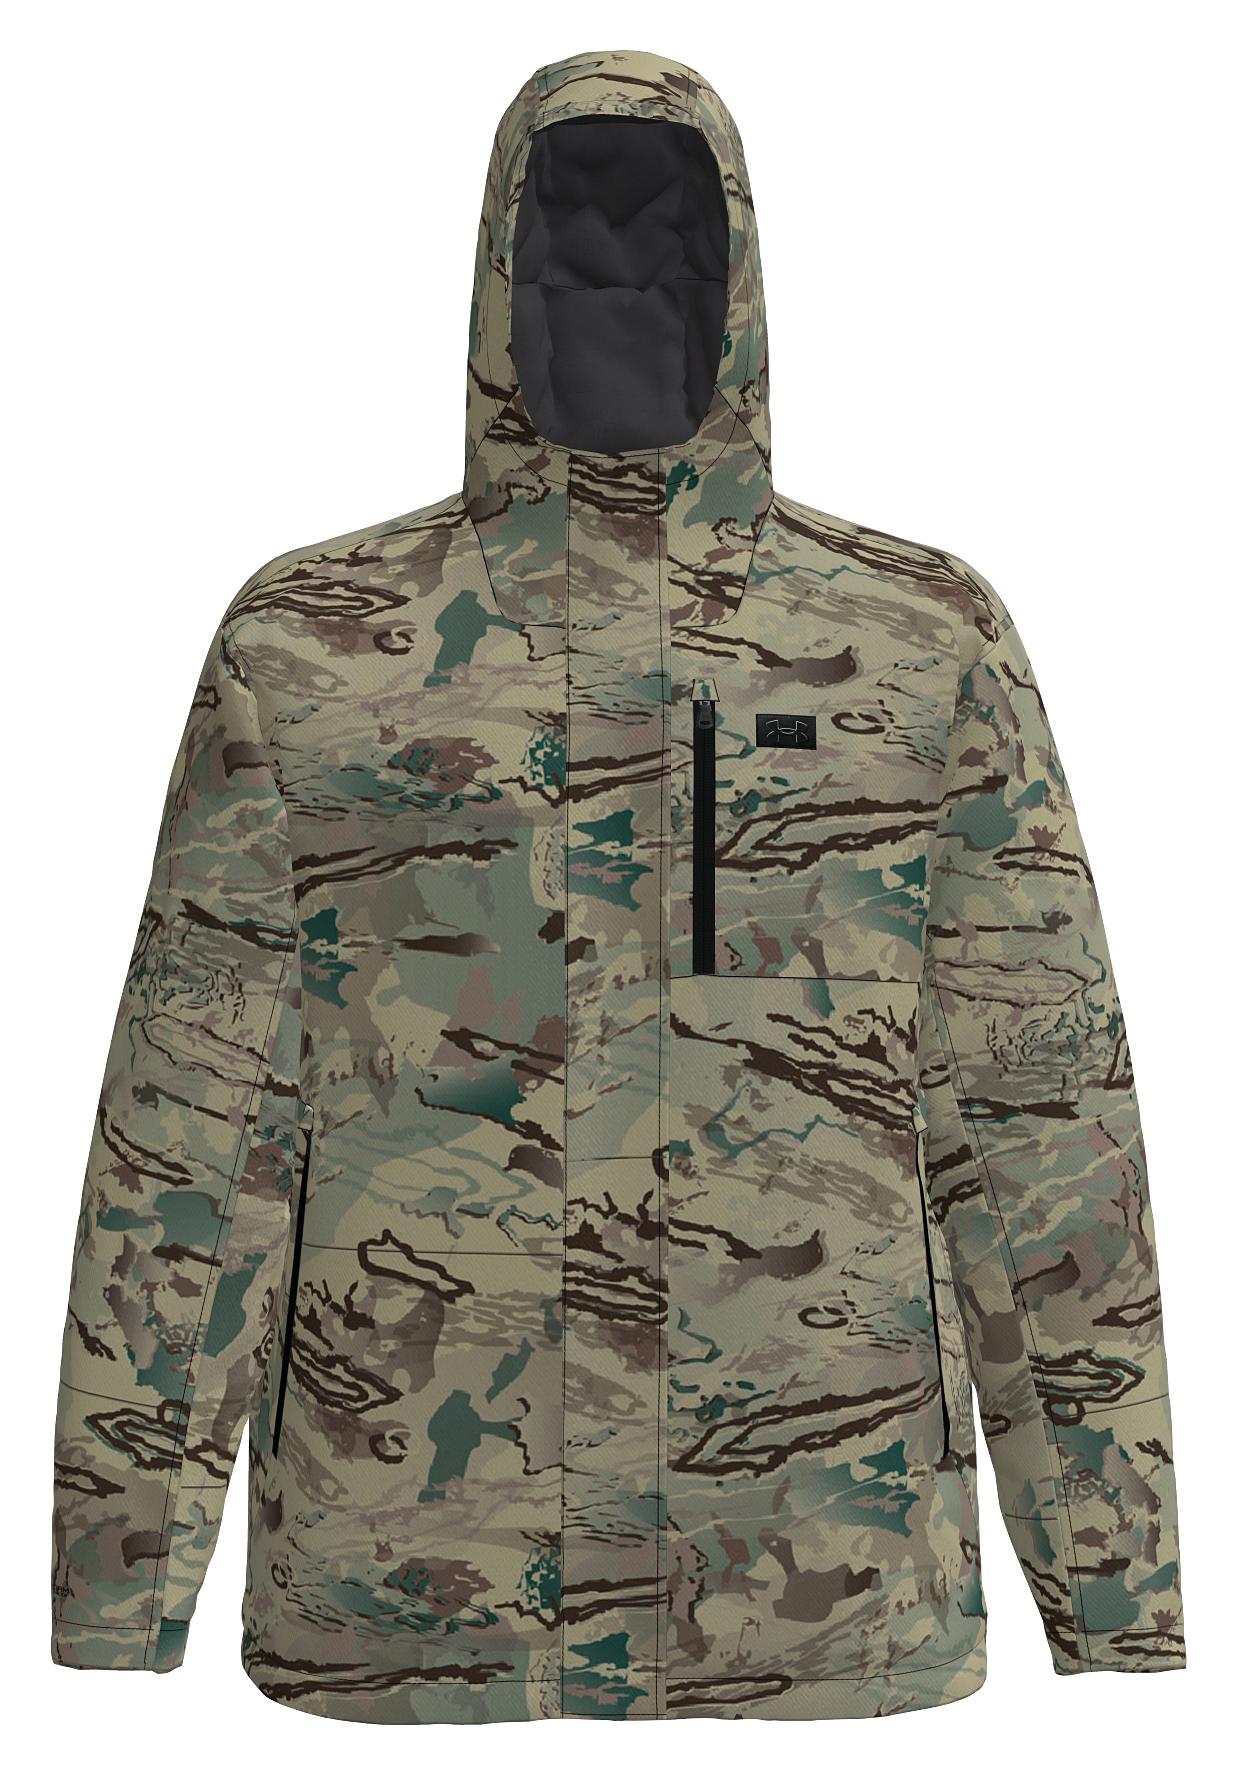 Under Armour Deep Freeze ColdGear INFRARED Jacket for Men